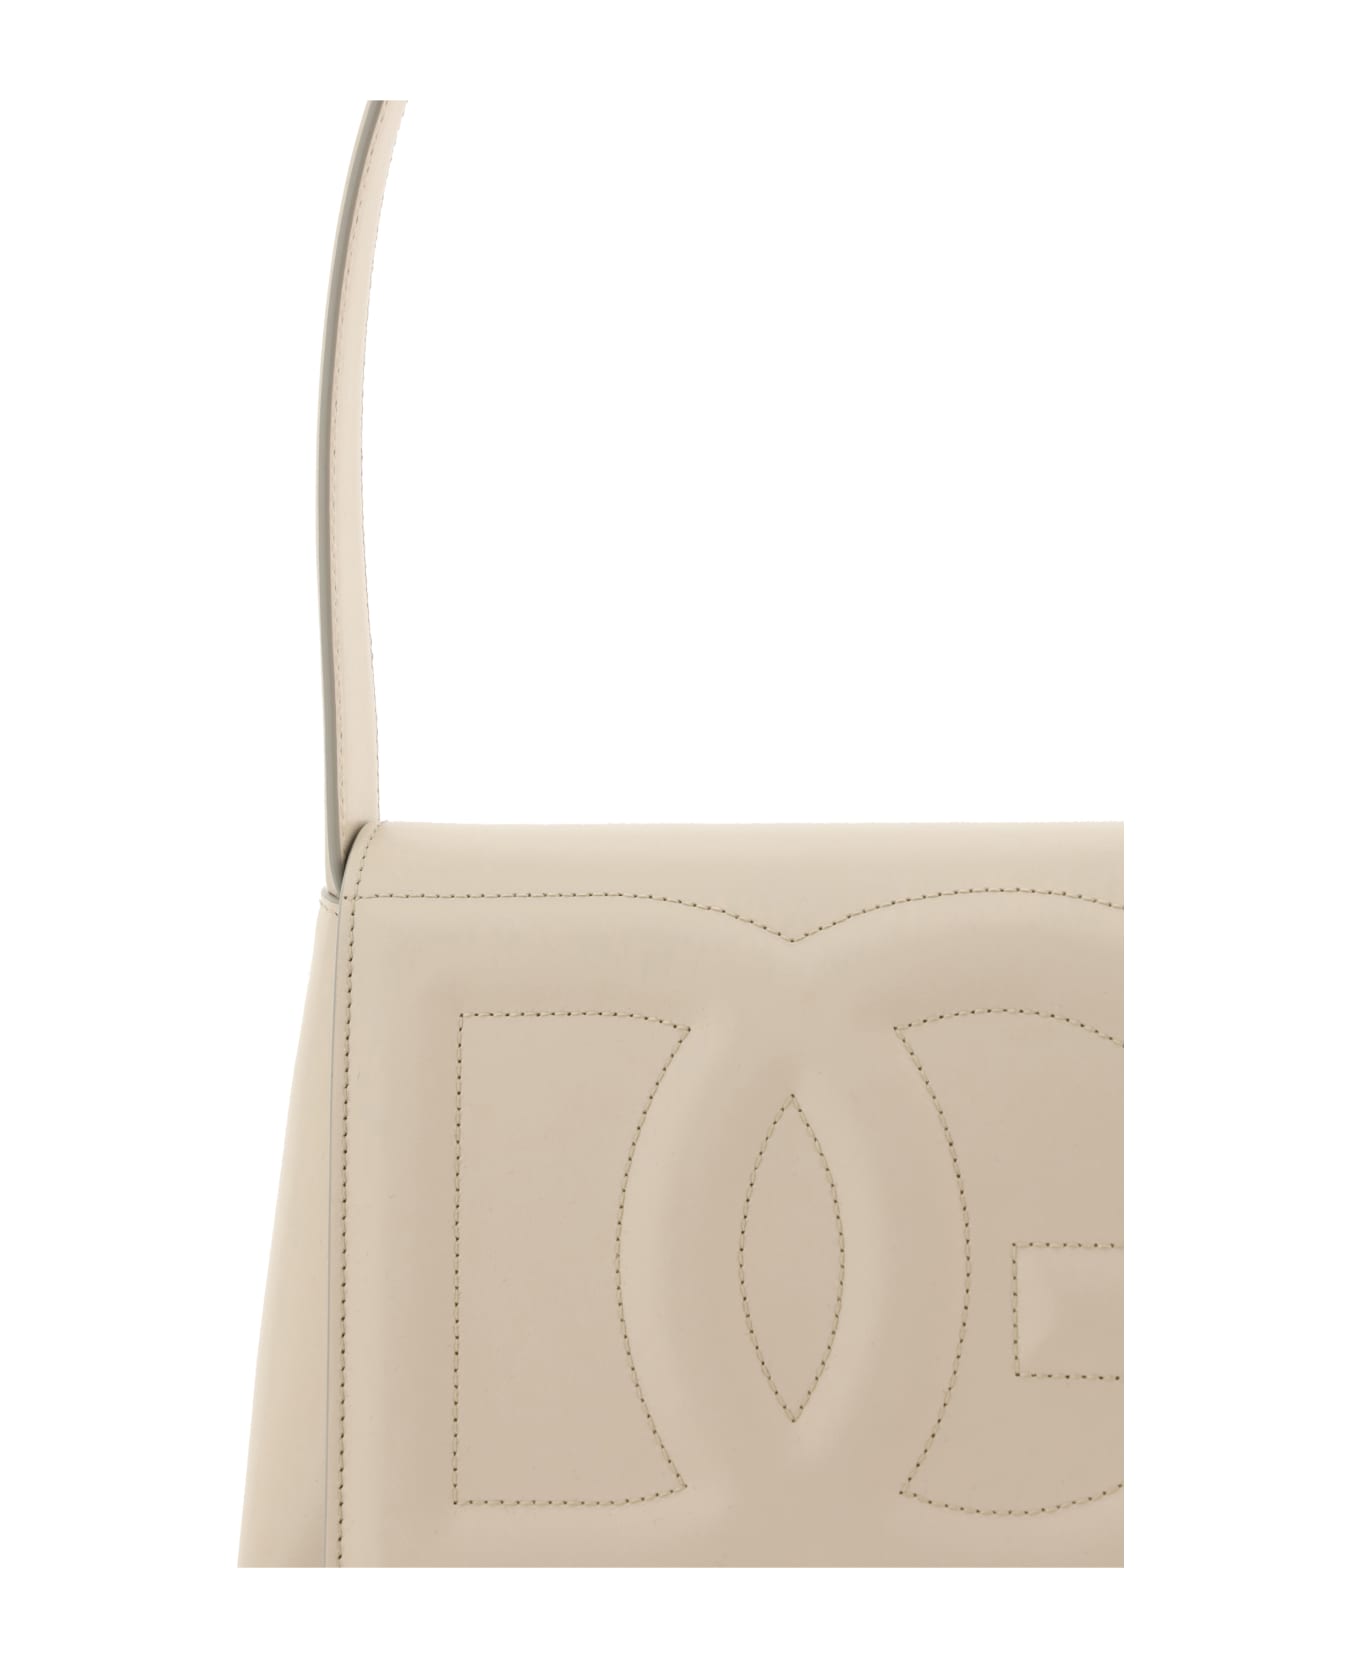 Dolce & Gabbana Shoulder Bag - Avorio